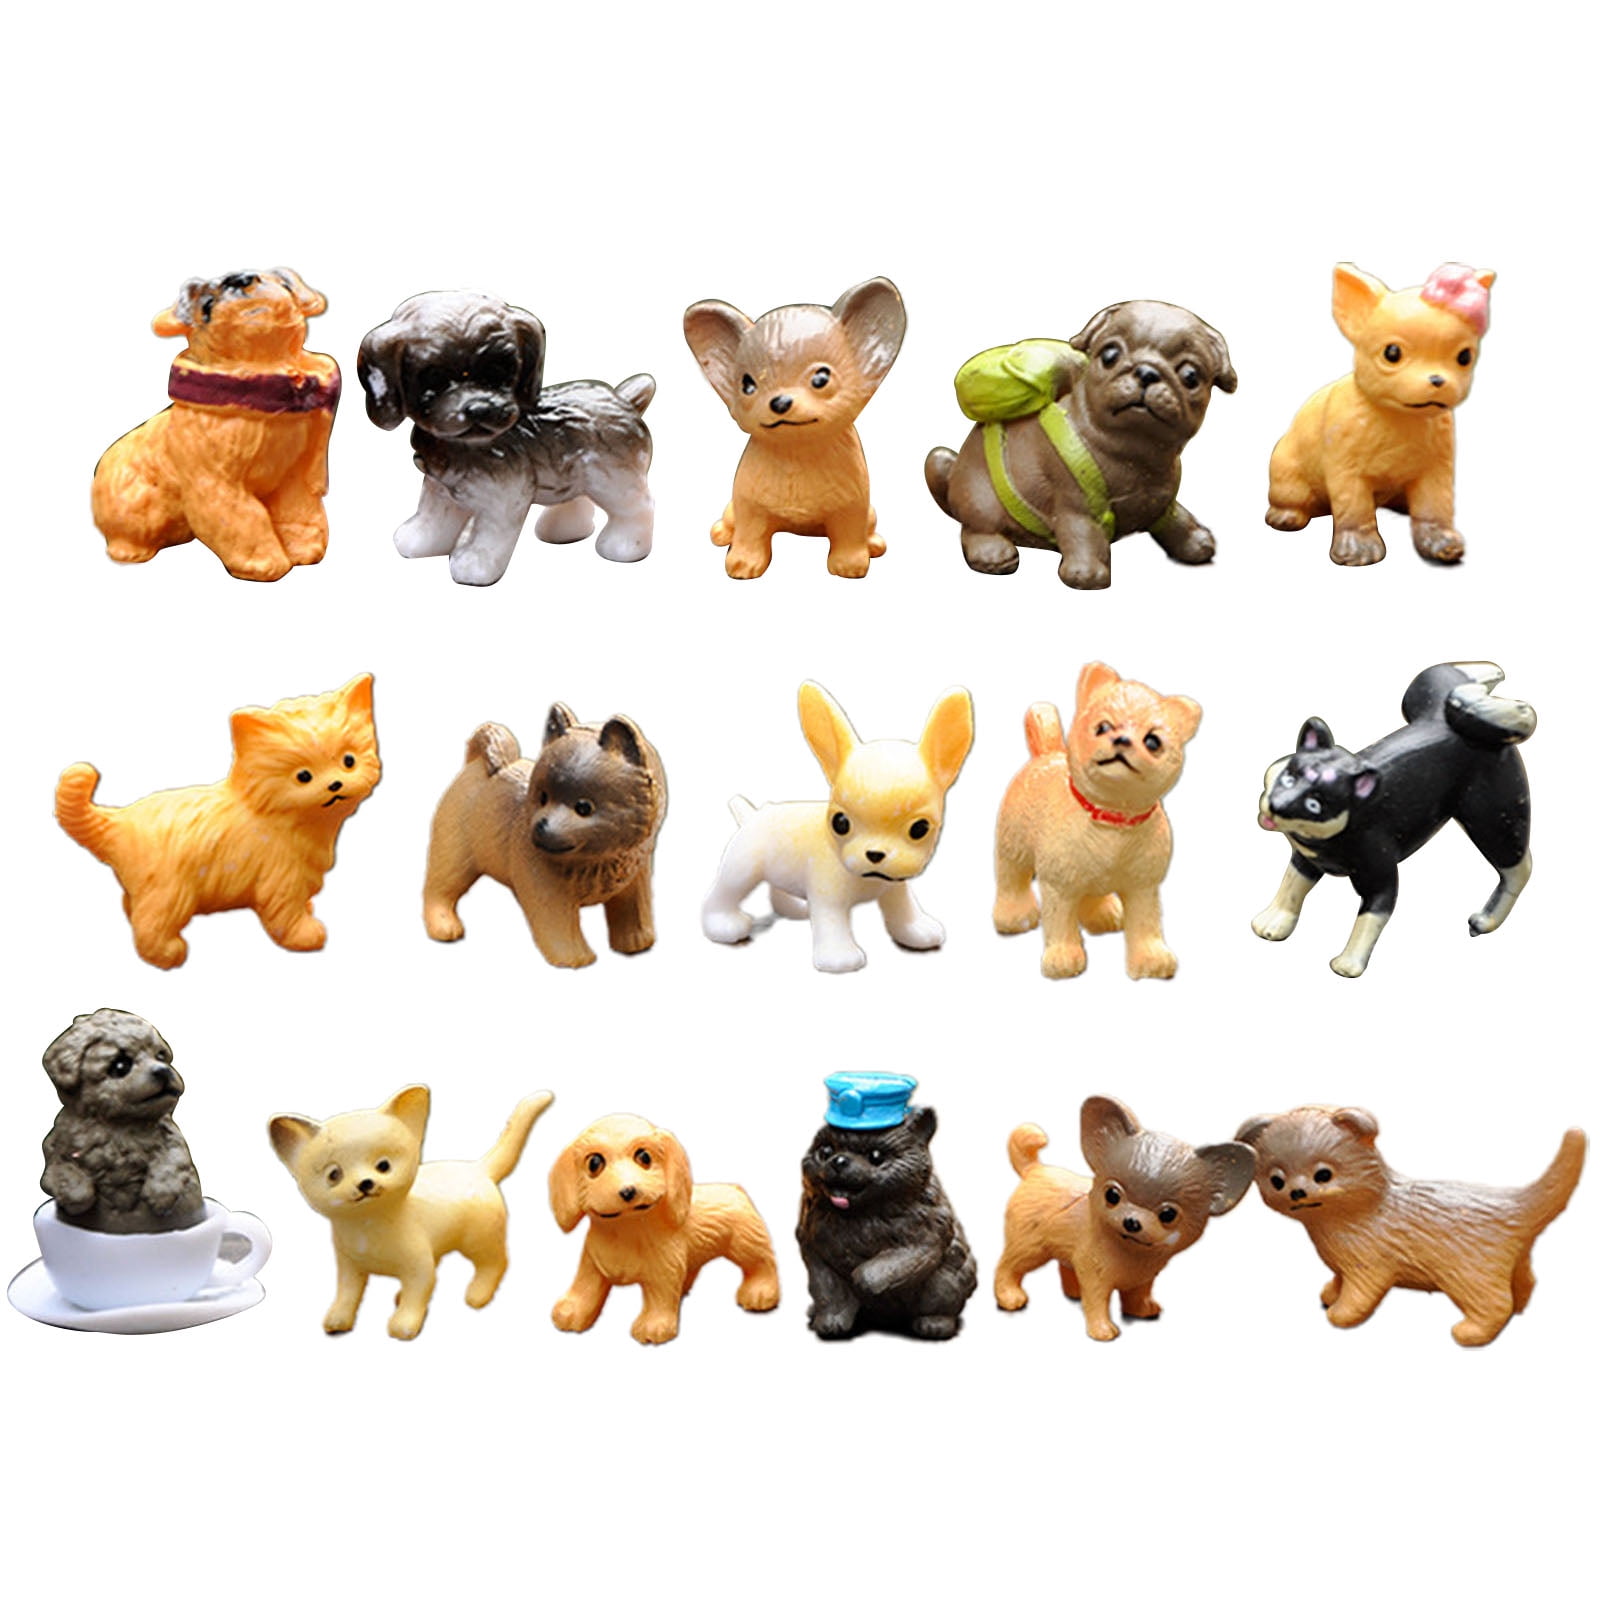 Details about   Noah's Ark Miniature Play Set Replacement Part Plastic Animal Figure Anteater 